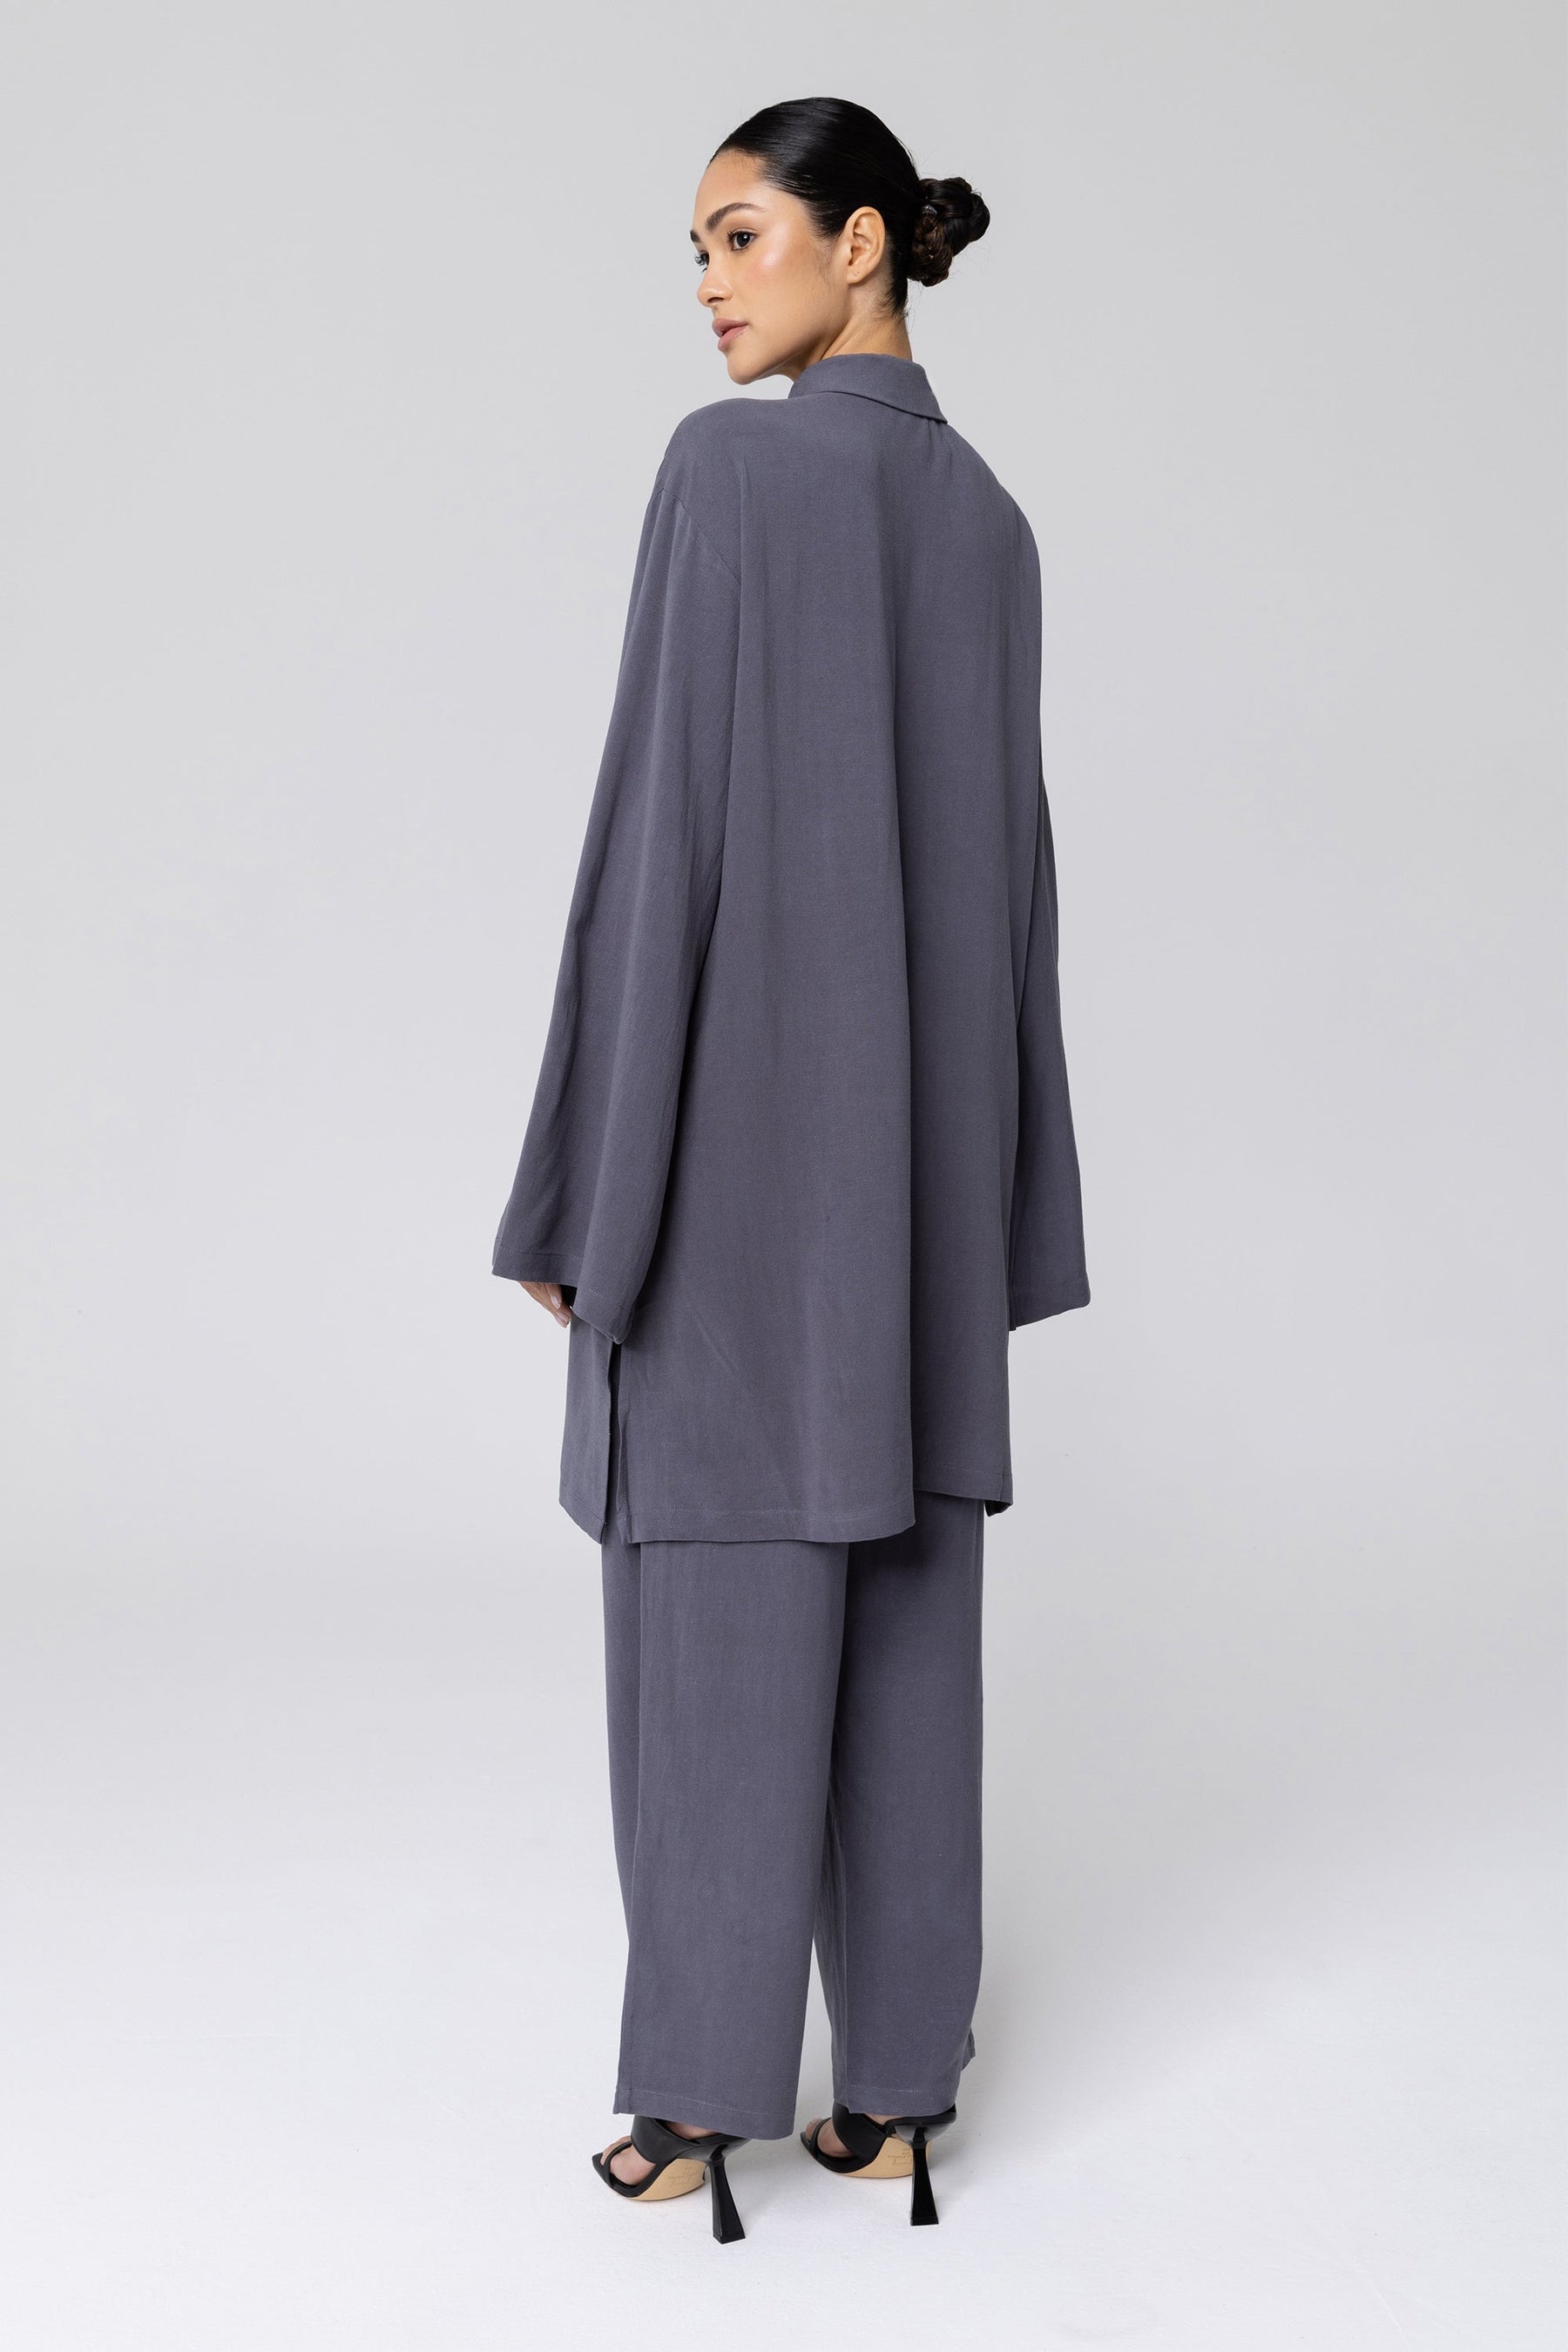 Gemma Linen Kimono Sleeve Button Down Top - Denim Veiled Collection 